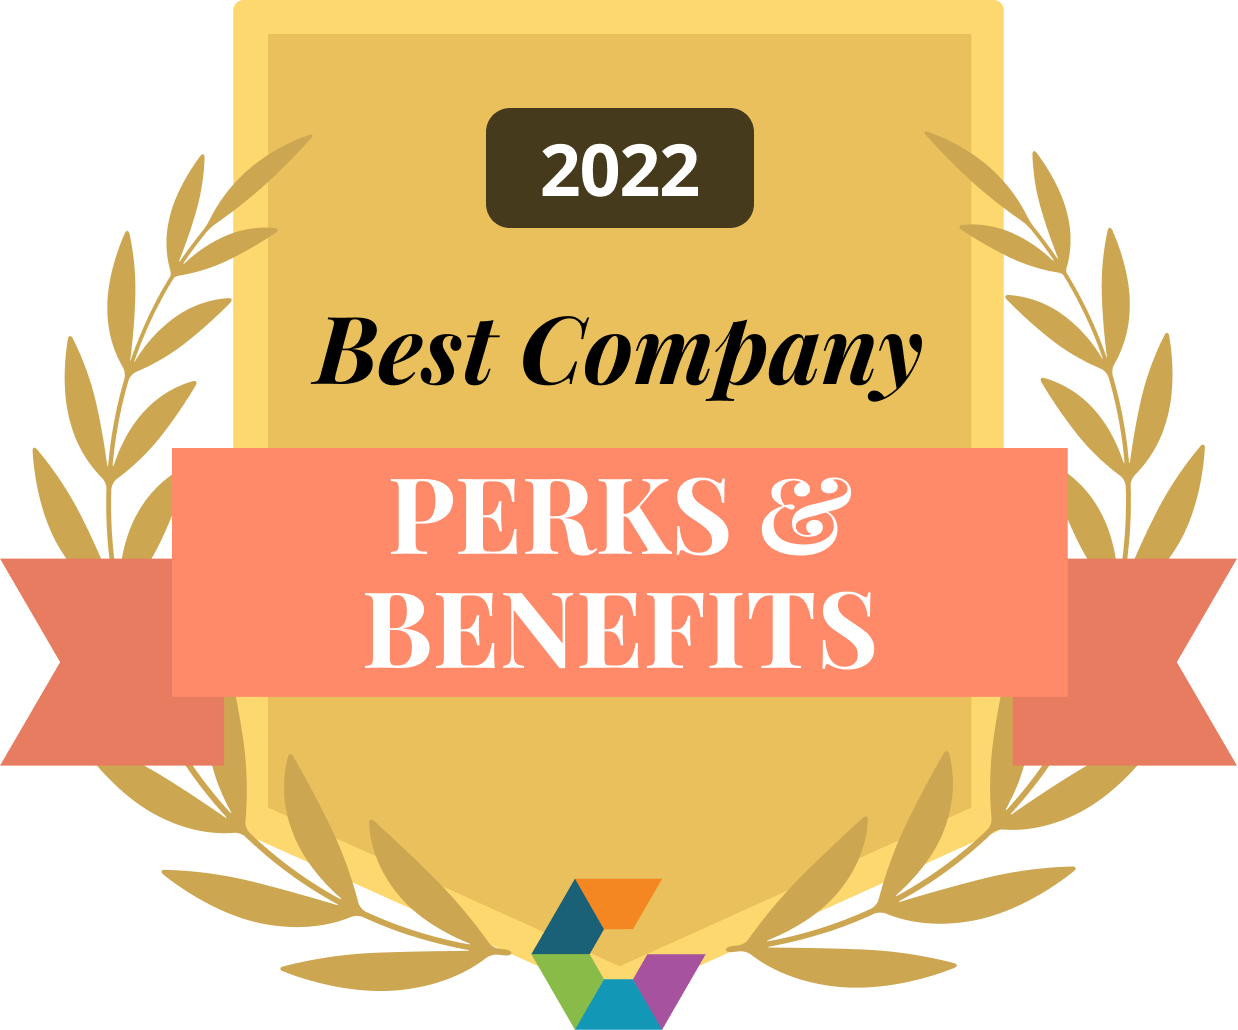 2022 Best Company: Perks & Benefits